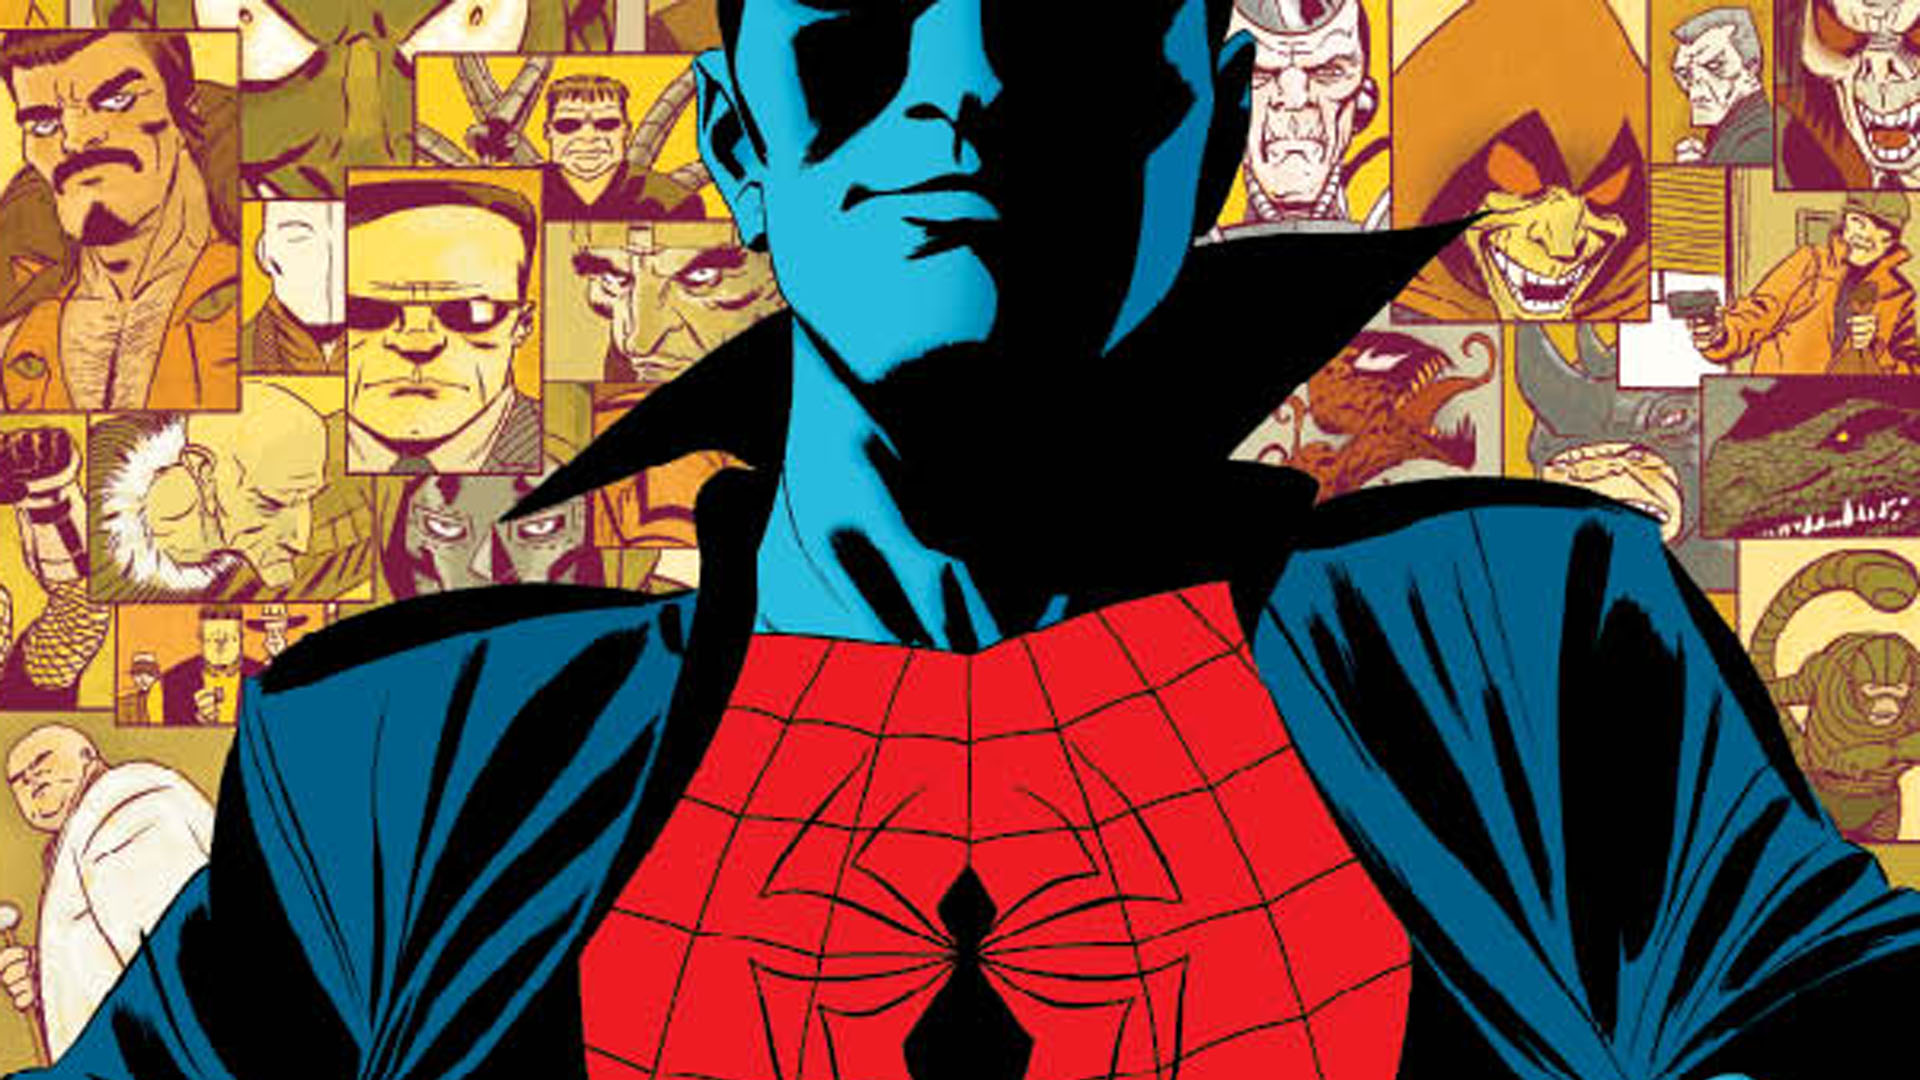 Amazing Spider-Man #648 variant cover